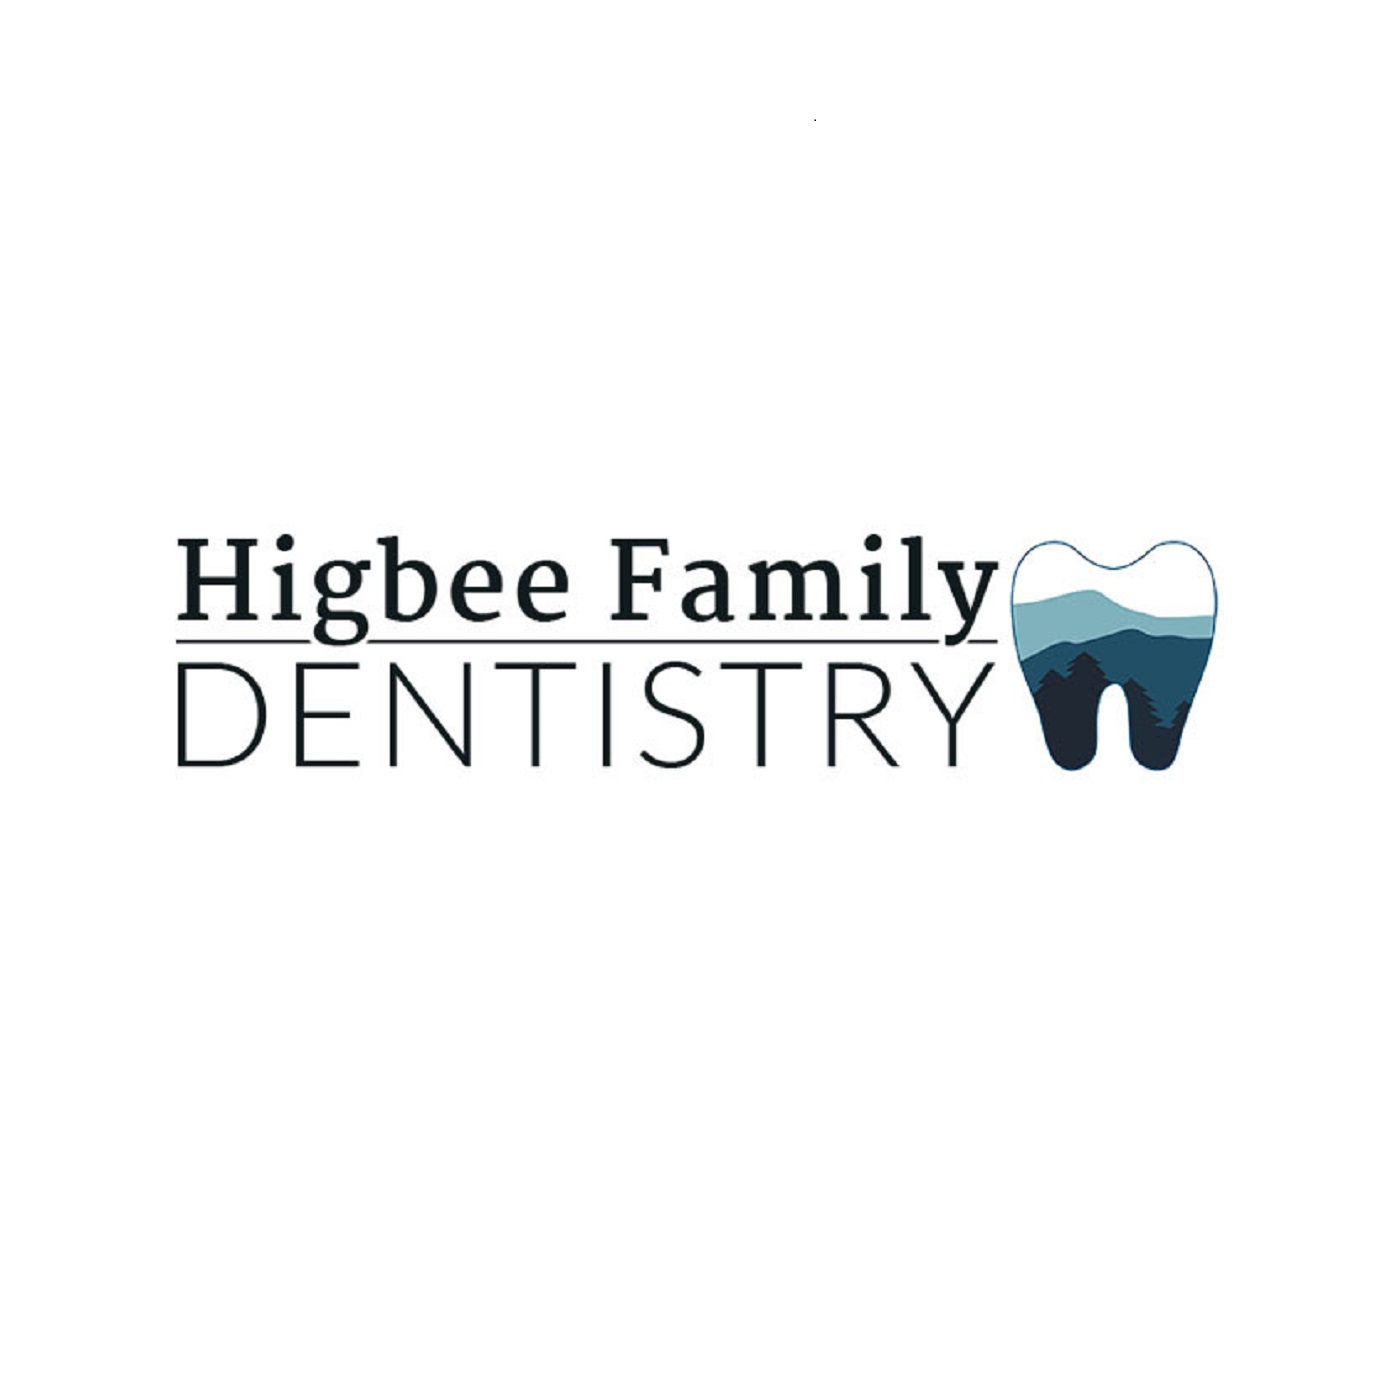 Higbee Family Dentistry